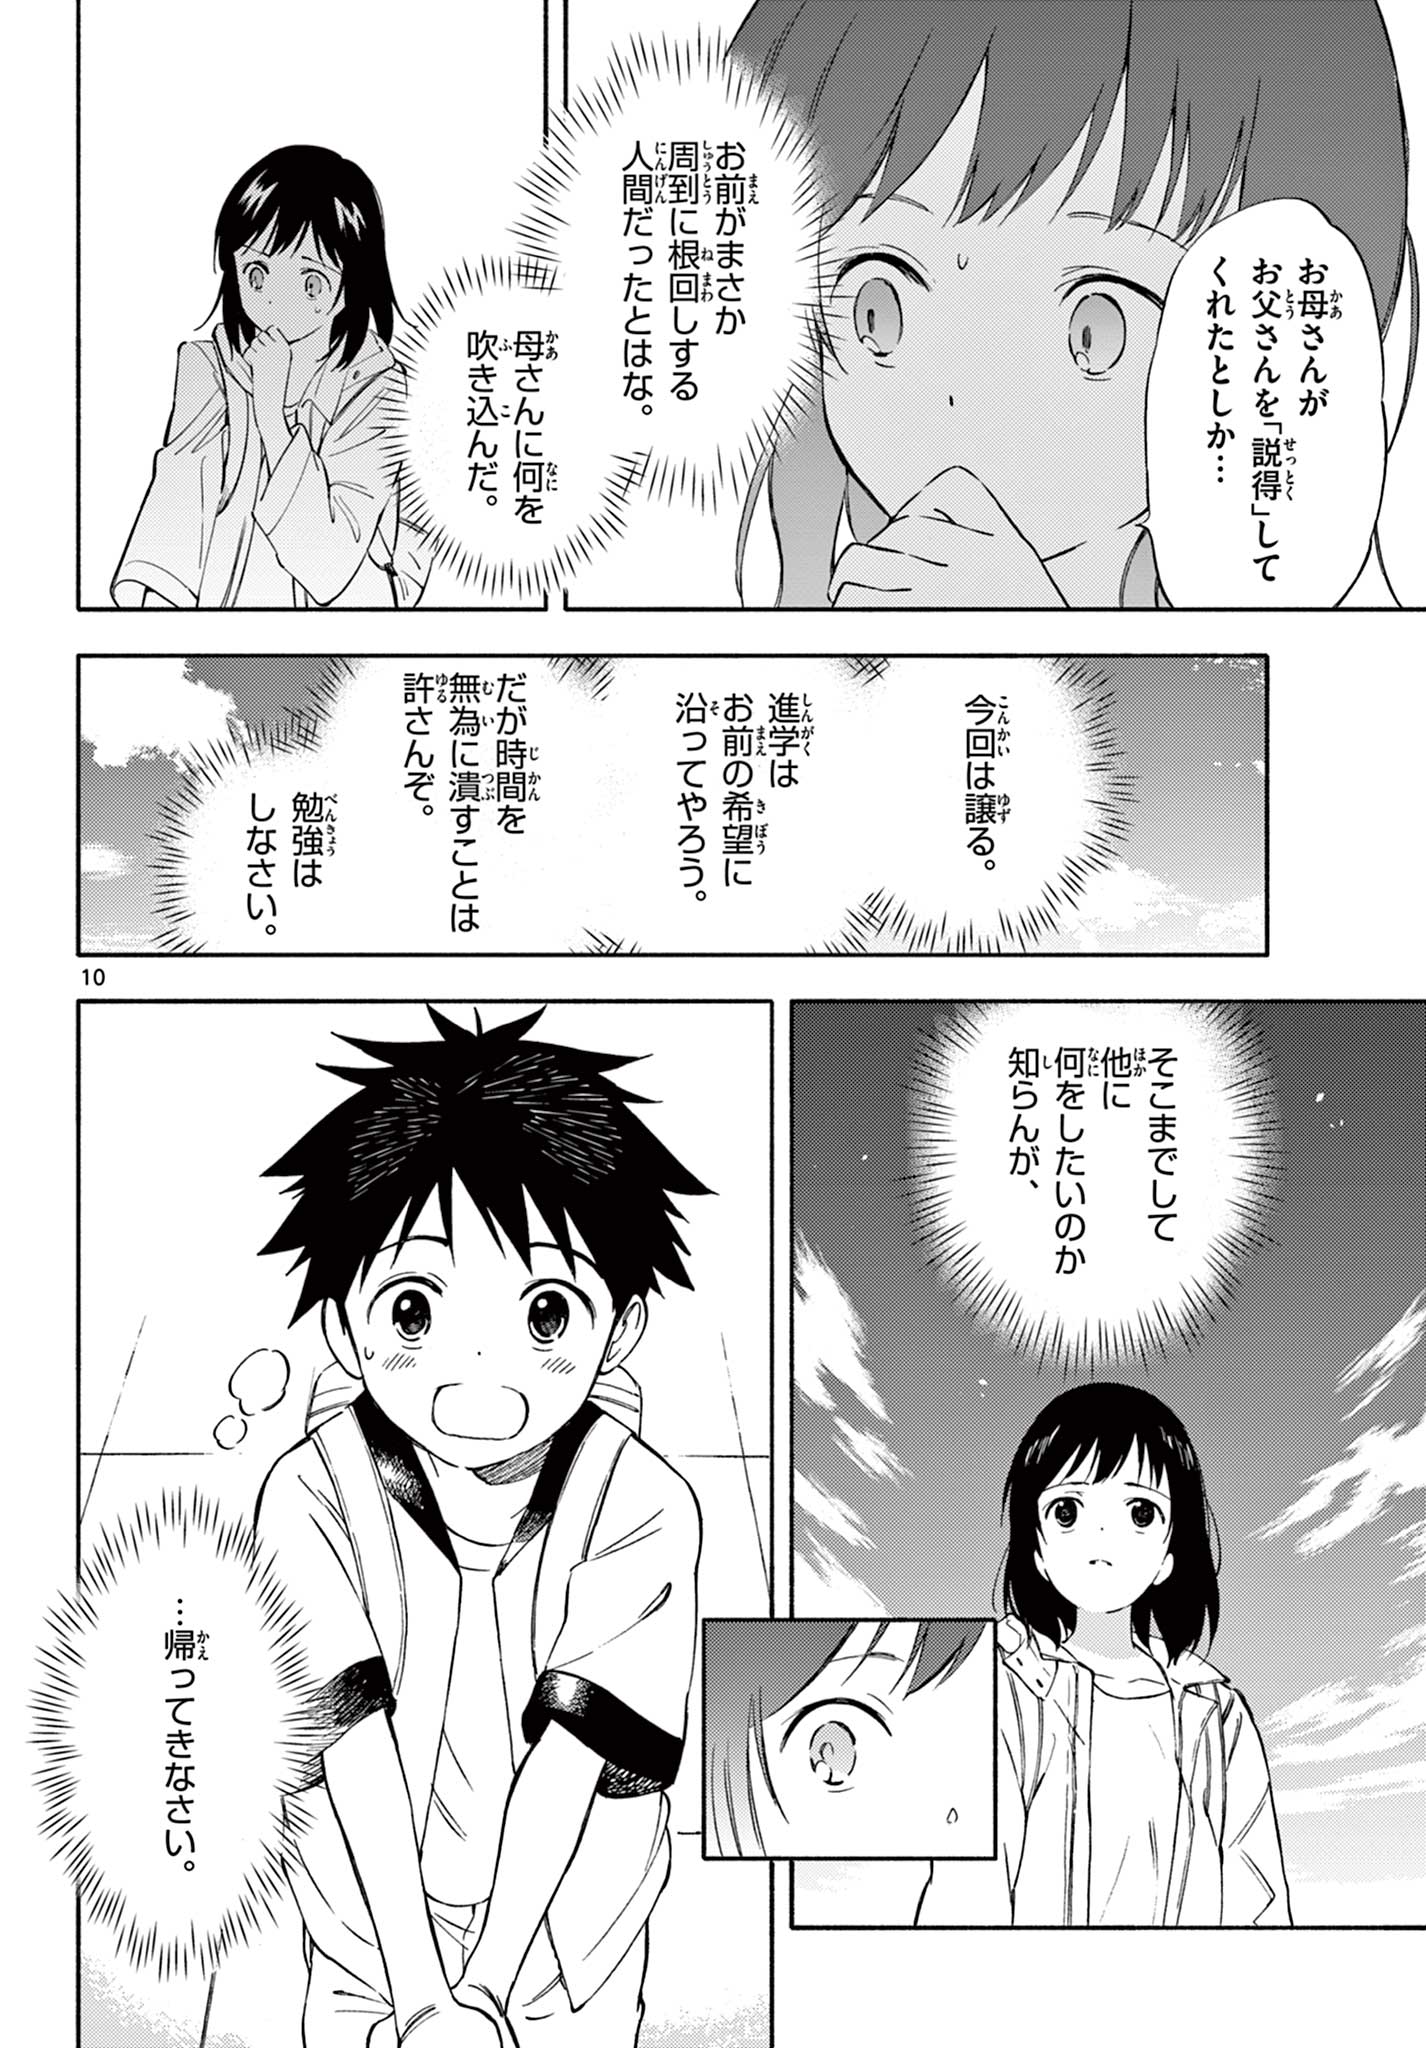 Nami no Shijima no Horizont - Chapter 14.1 - Page 10